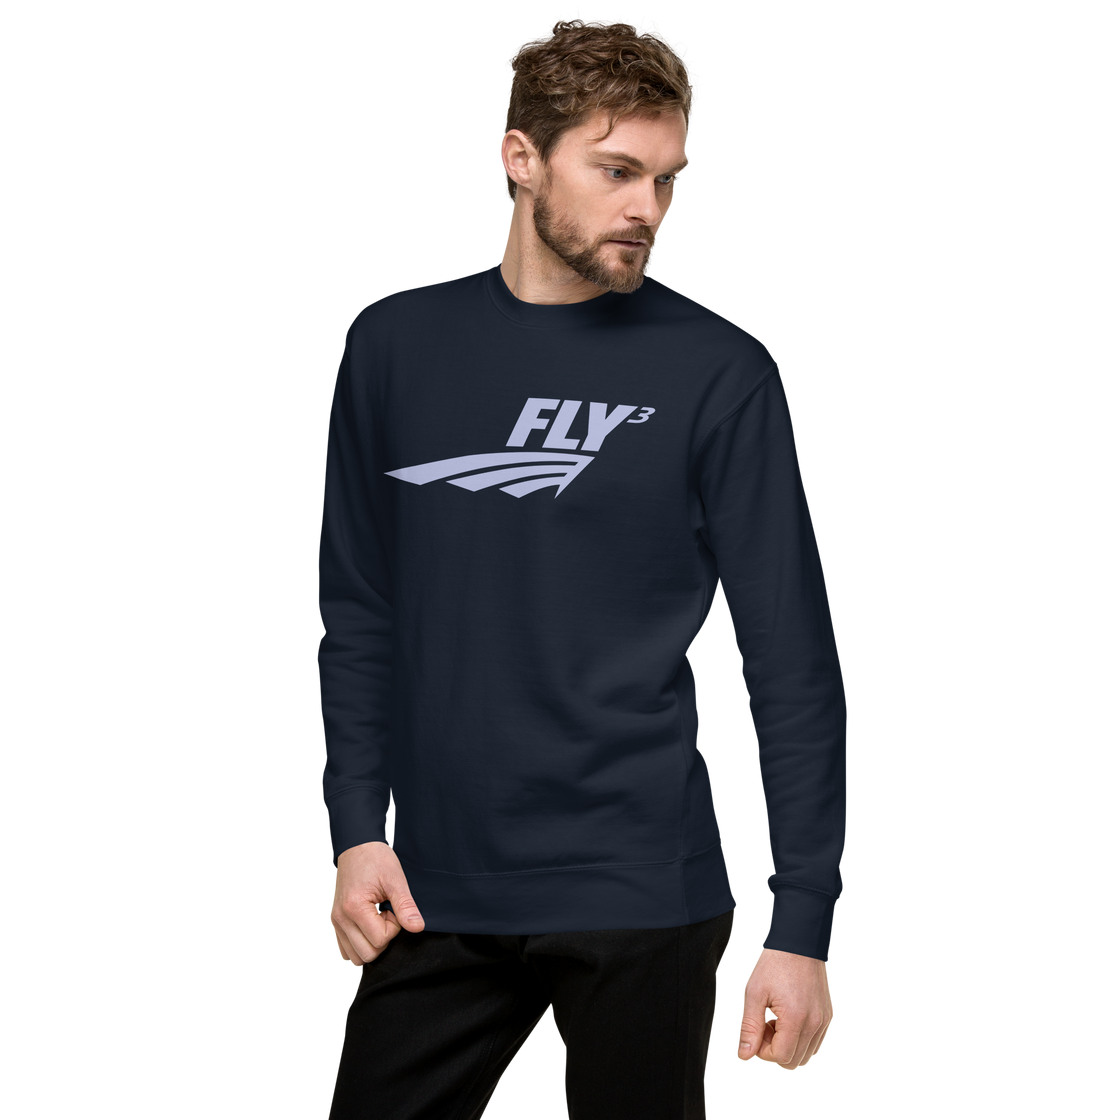 FLY³ Archangel Premium Sweatshirt | Flycube